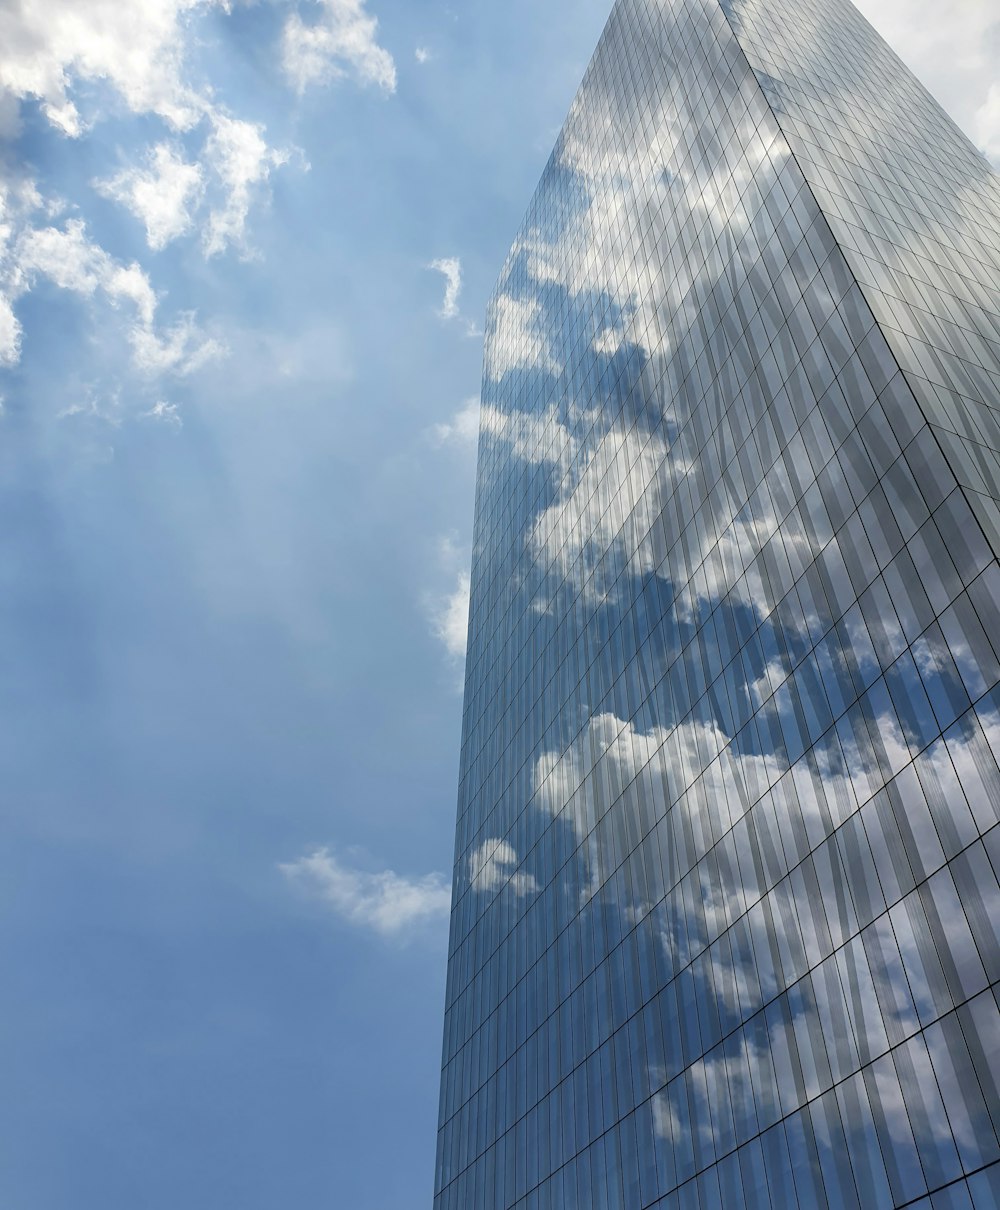 blue glass building under blue sky during daytime